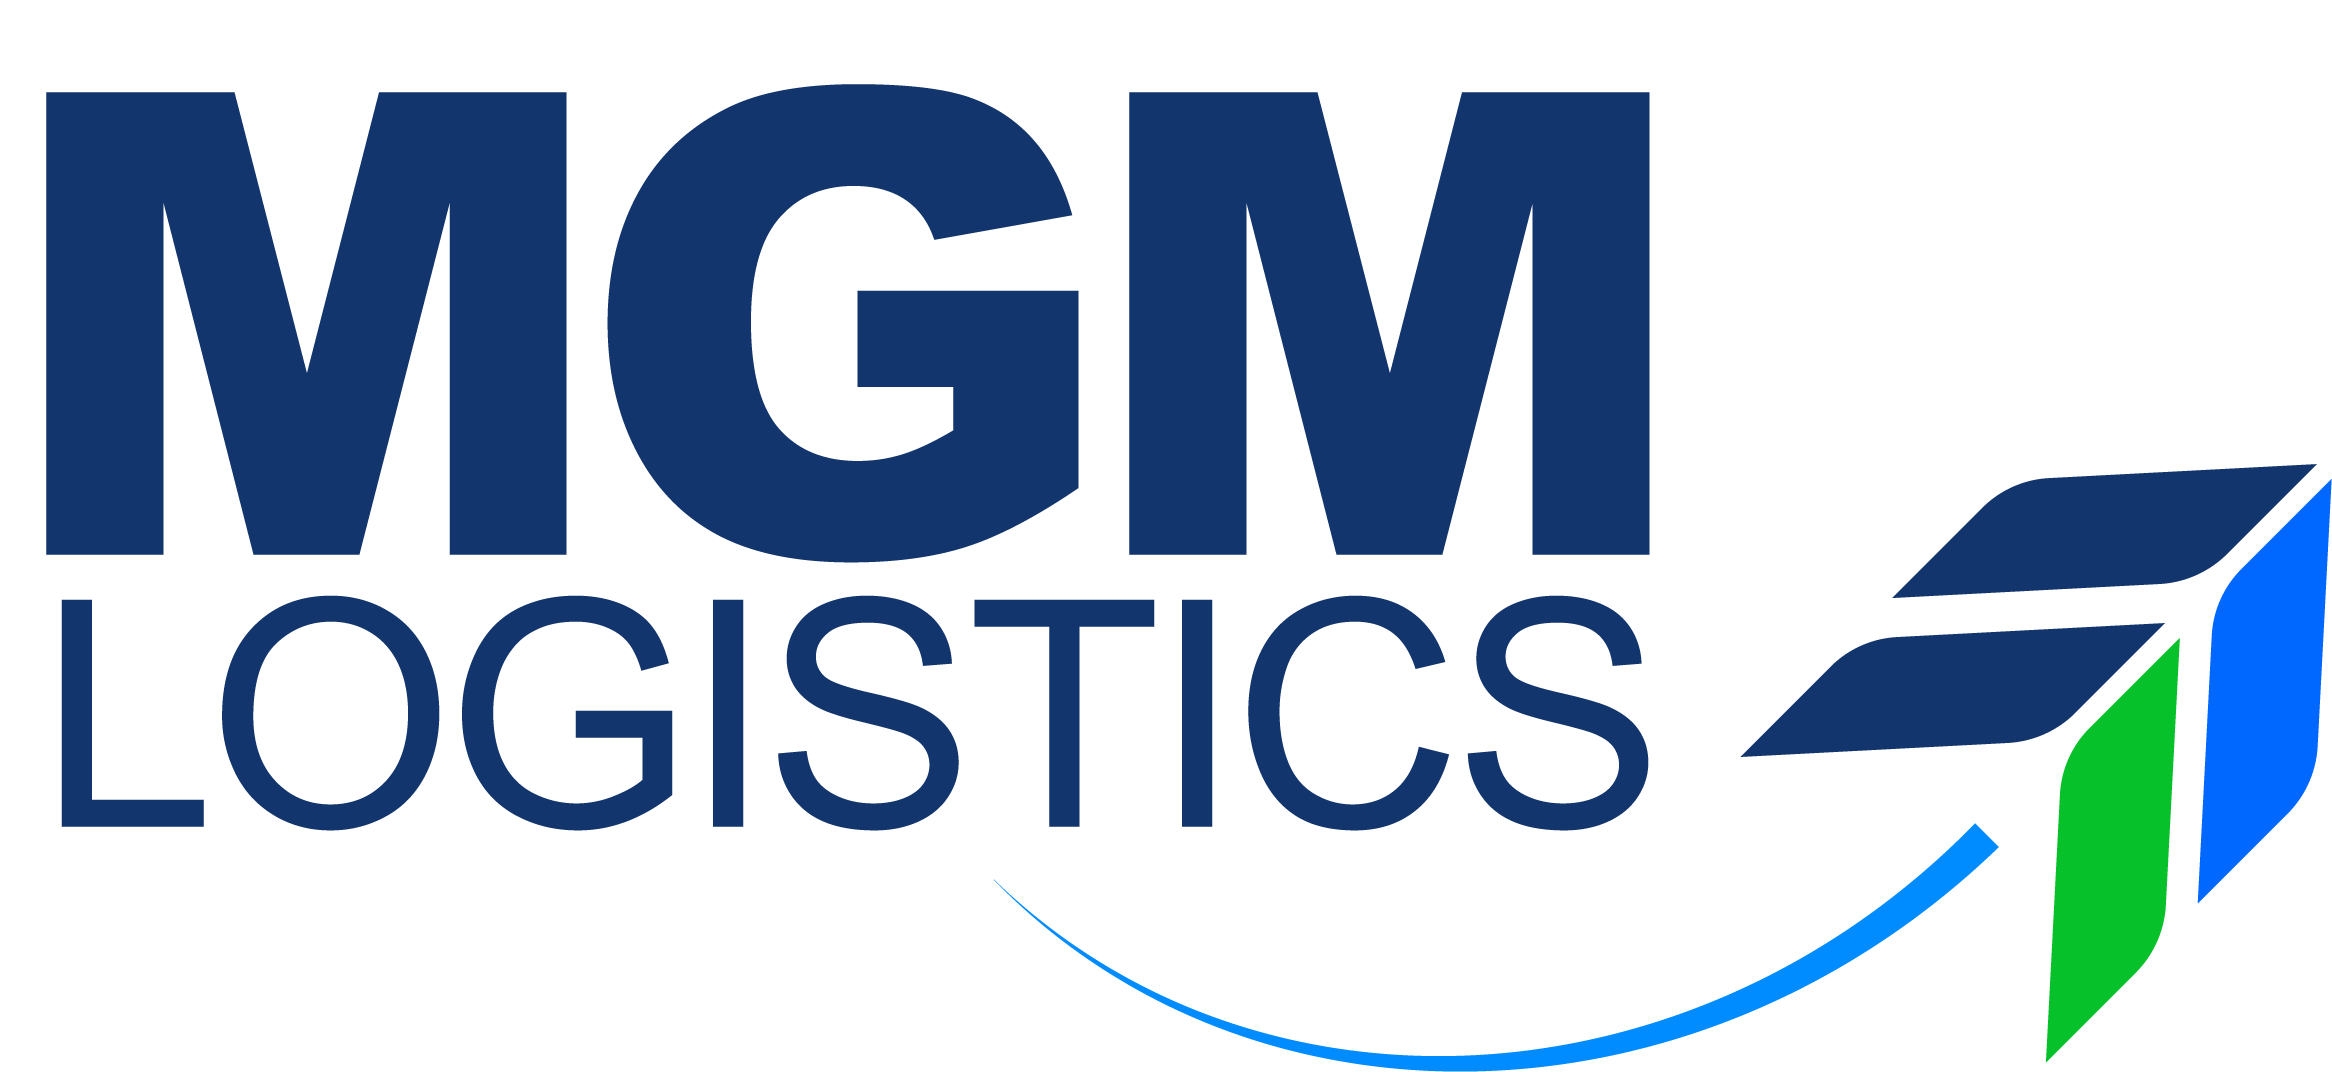 MGM logo.png